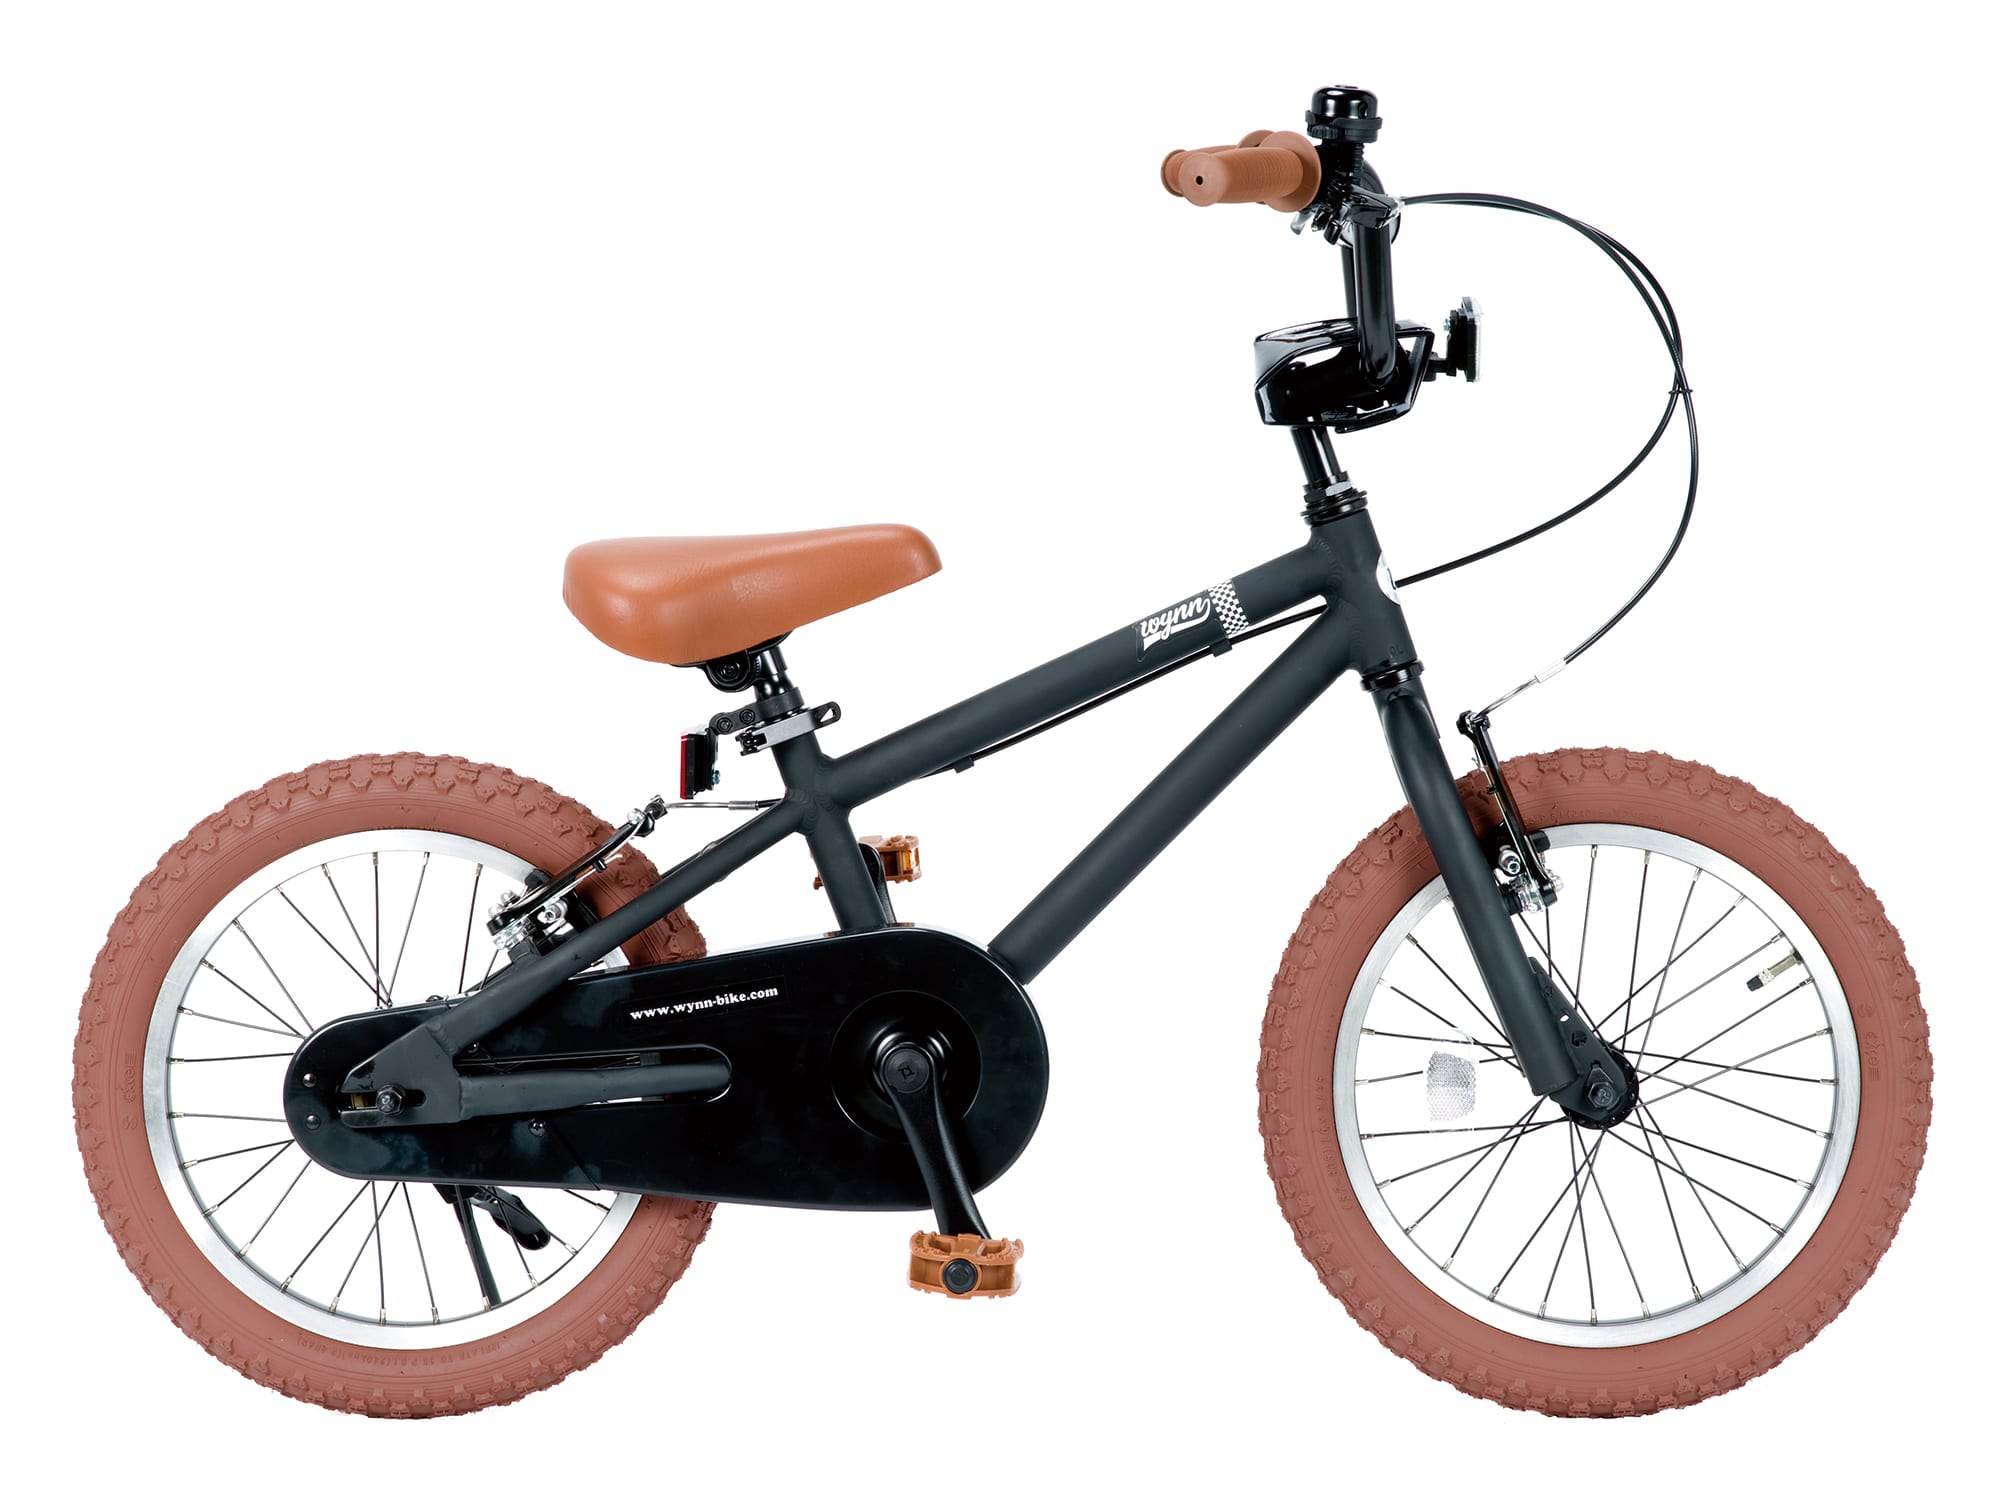 Wynn 16inch Kids Bike | 子供用16インチ自転車